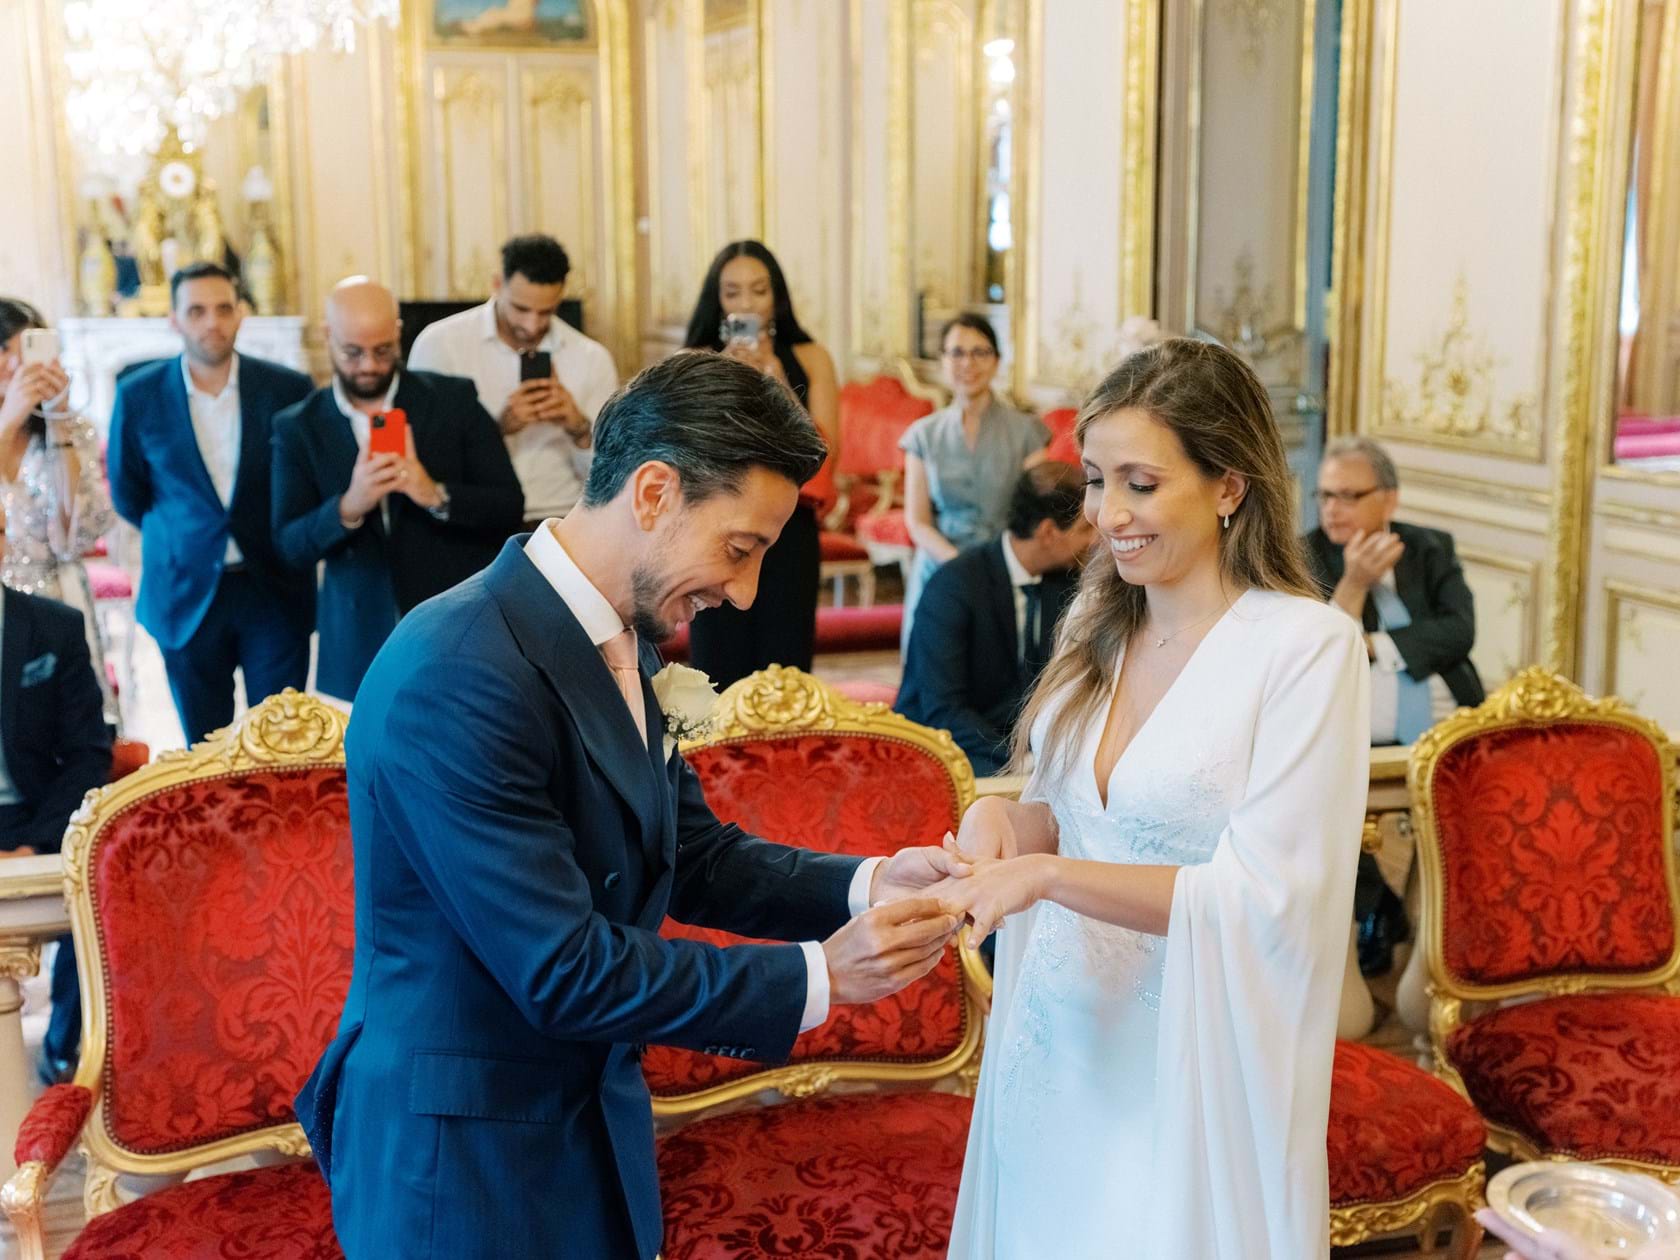 Classy Upscale Wedding in Paris - Mitheo Events